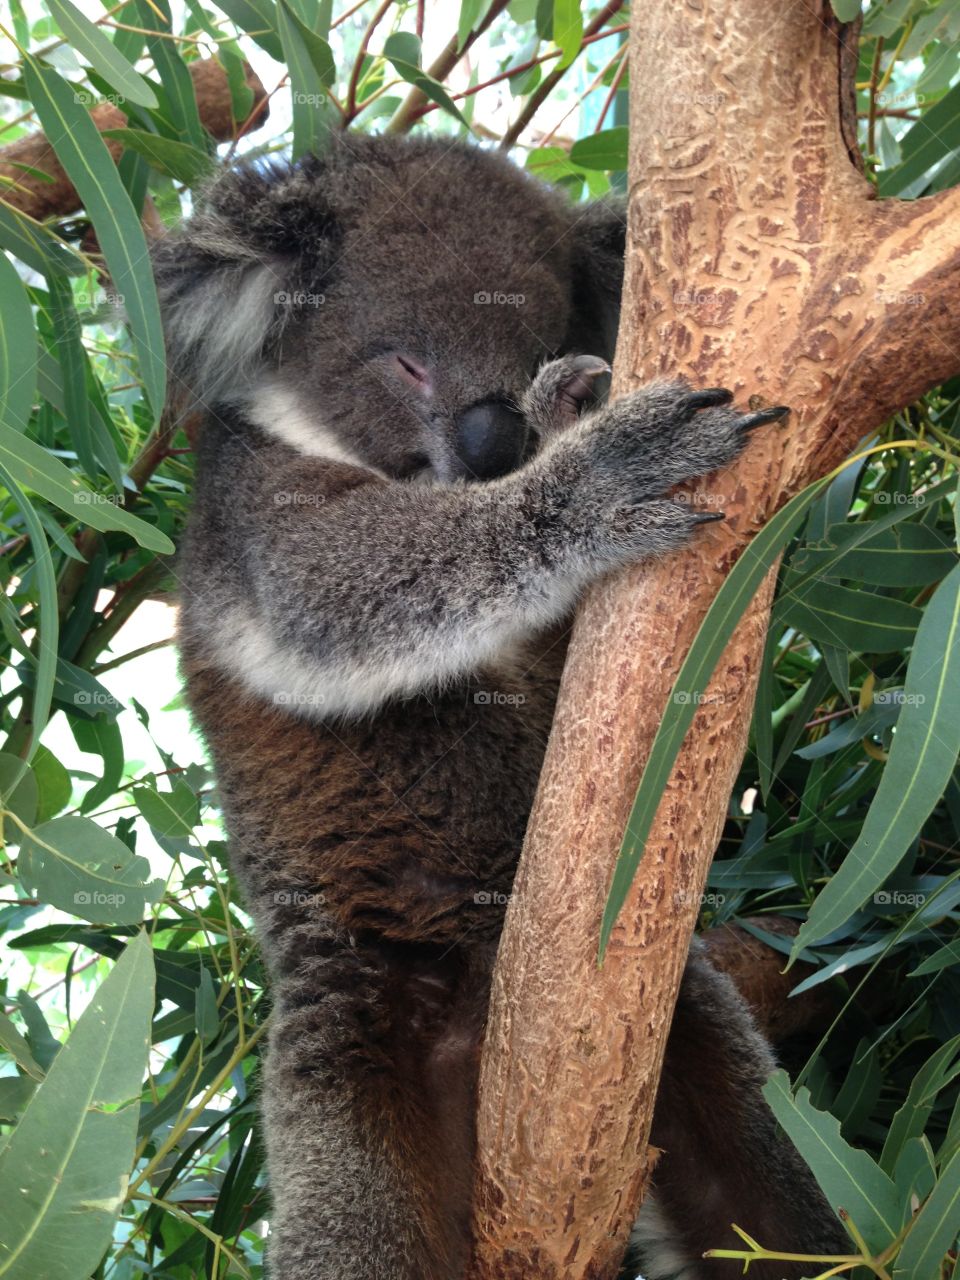 Koala in Australia. Koala in Australia